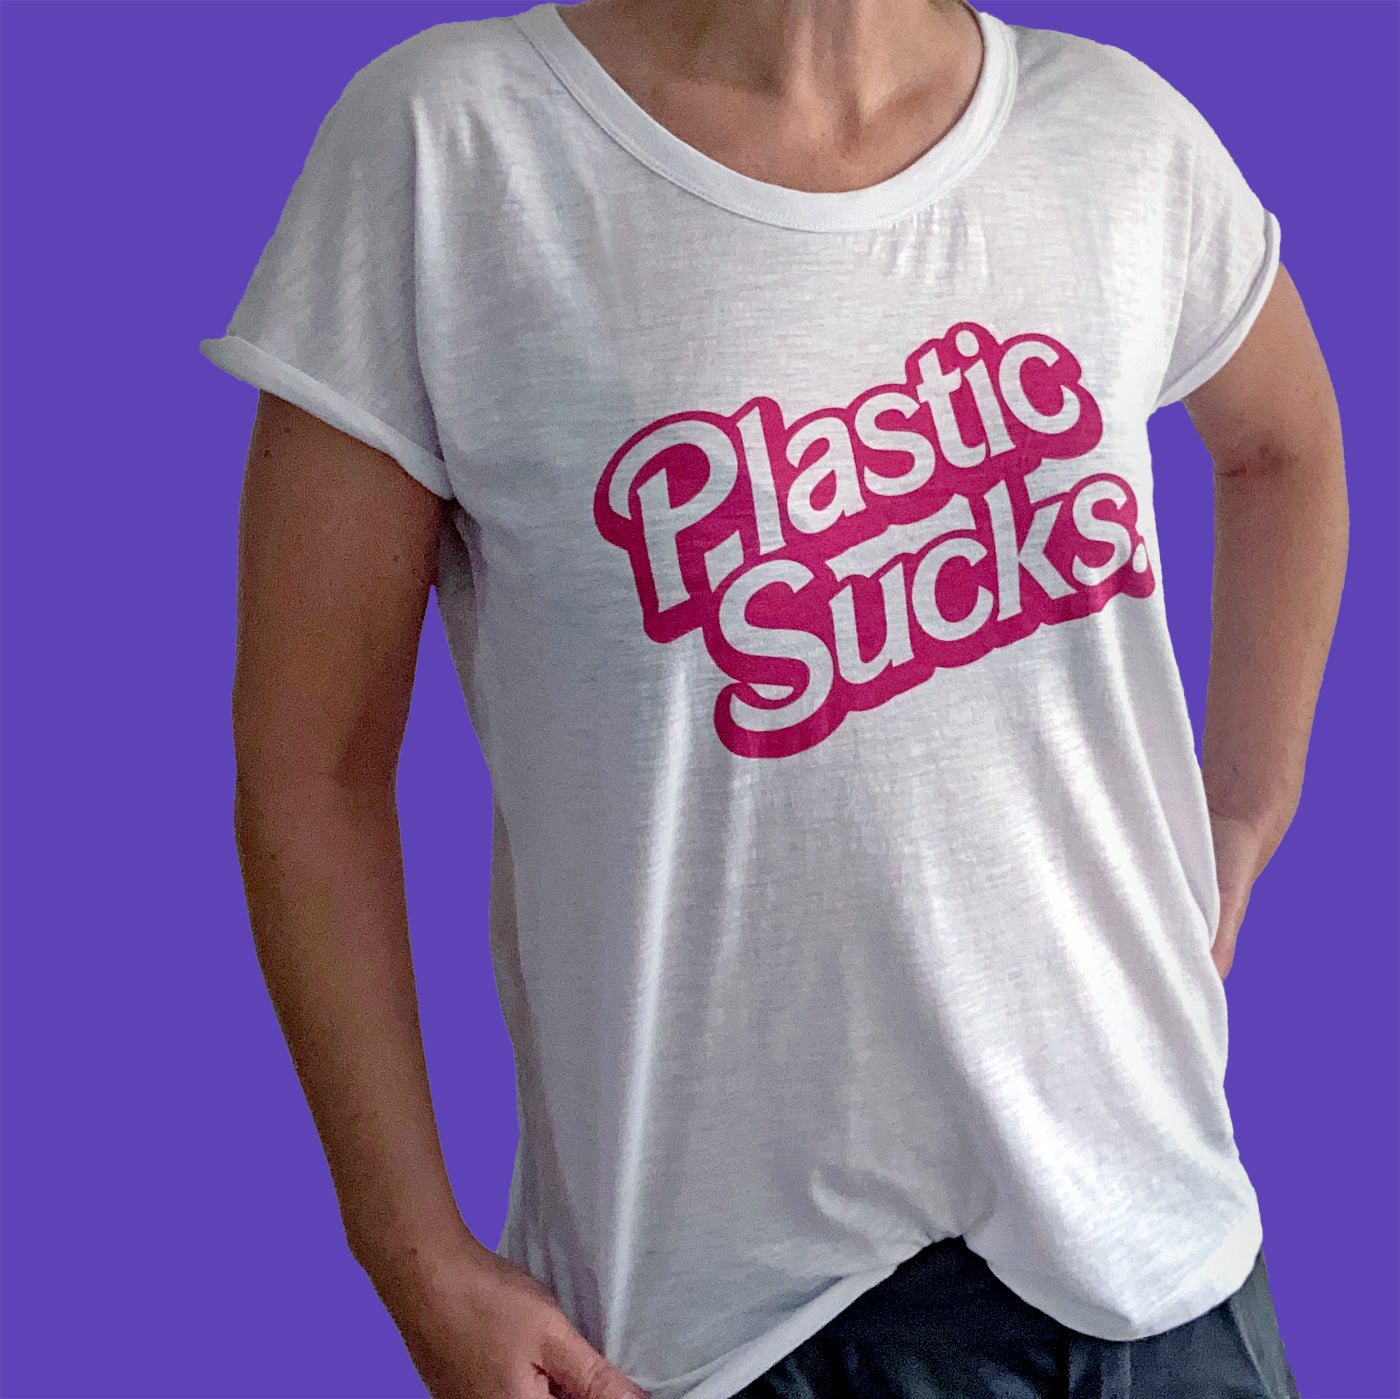 Plastic sucks barbie girl shirt